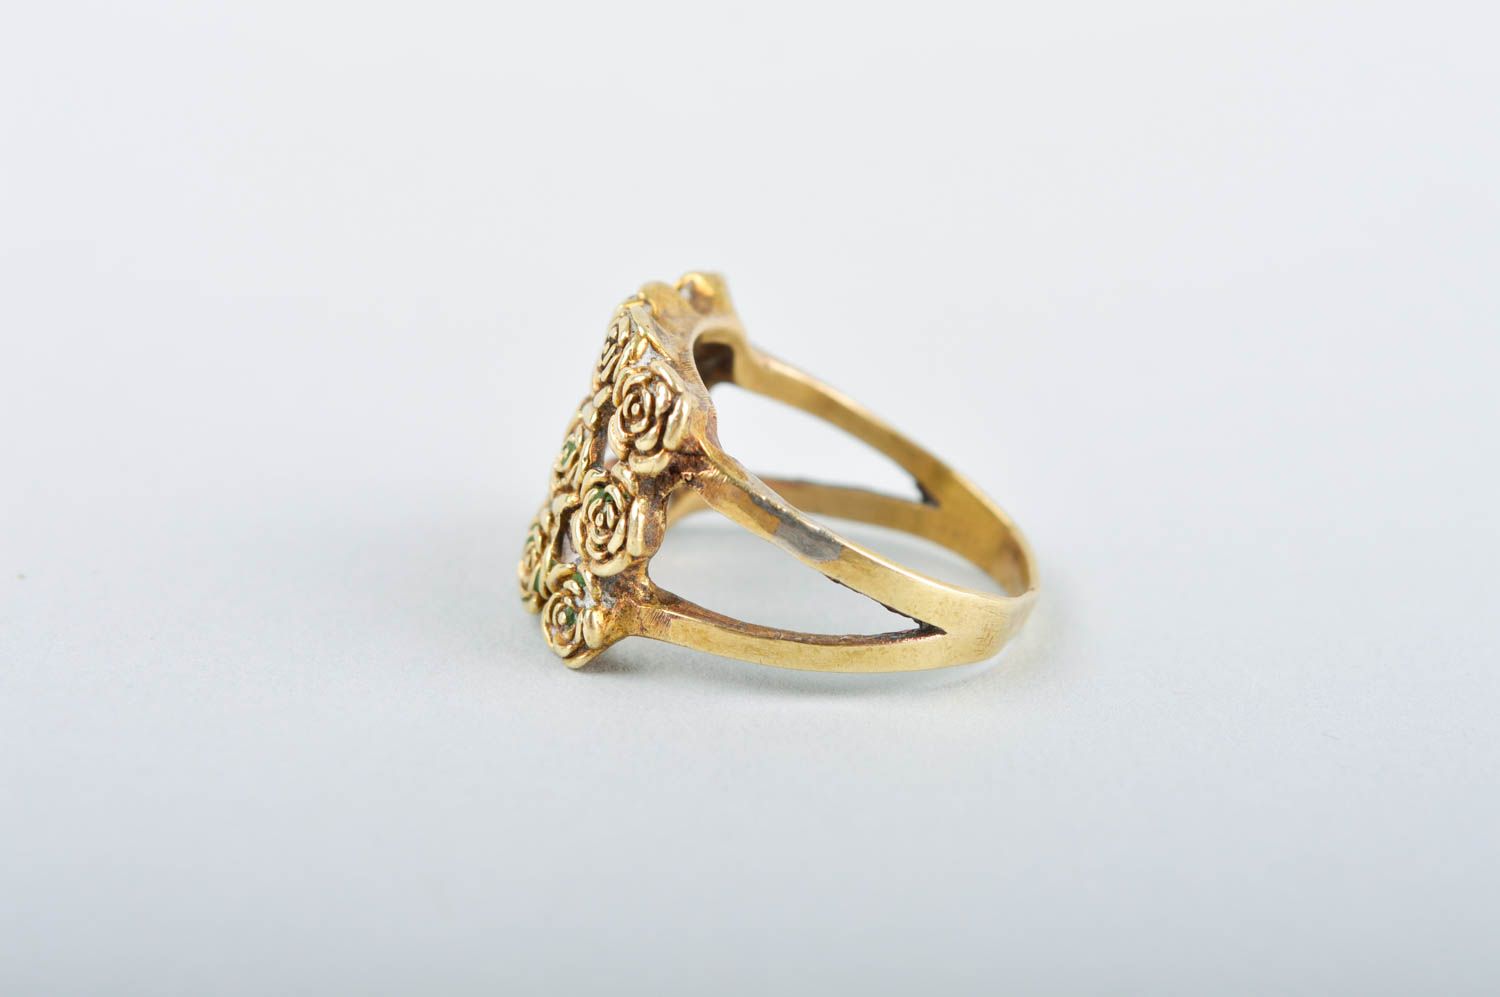 Unusual handmade metal ring fashion trends metal craft artisan jewelry photo 3